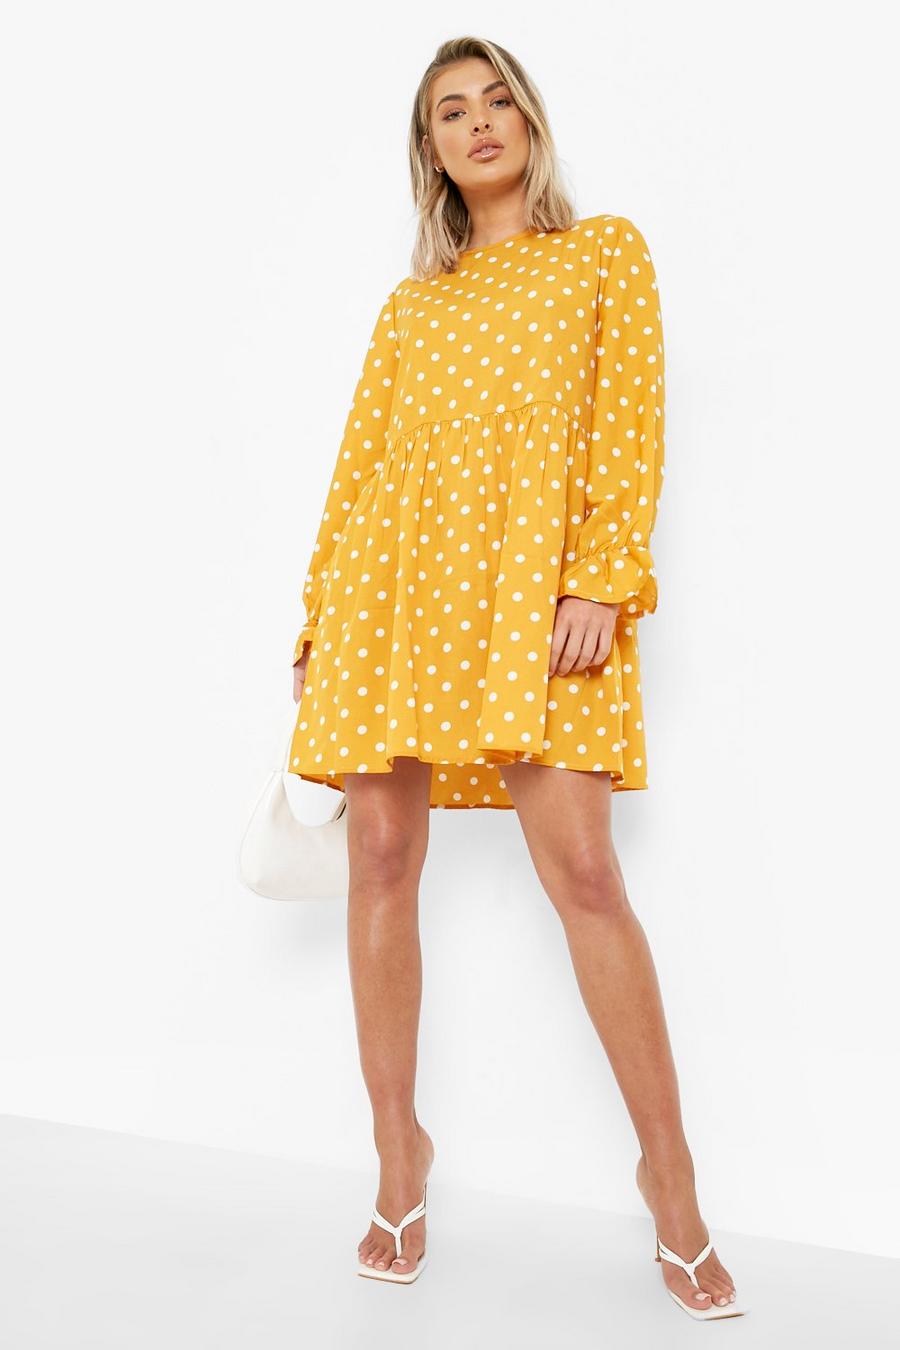 Mustard yellow Polka Dot Frill Cuff Smock Dress